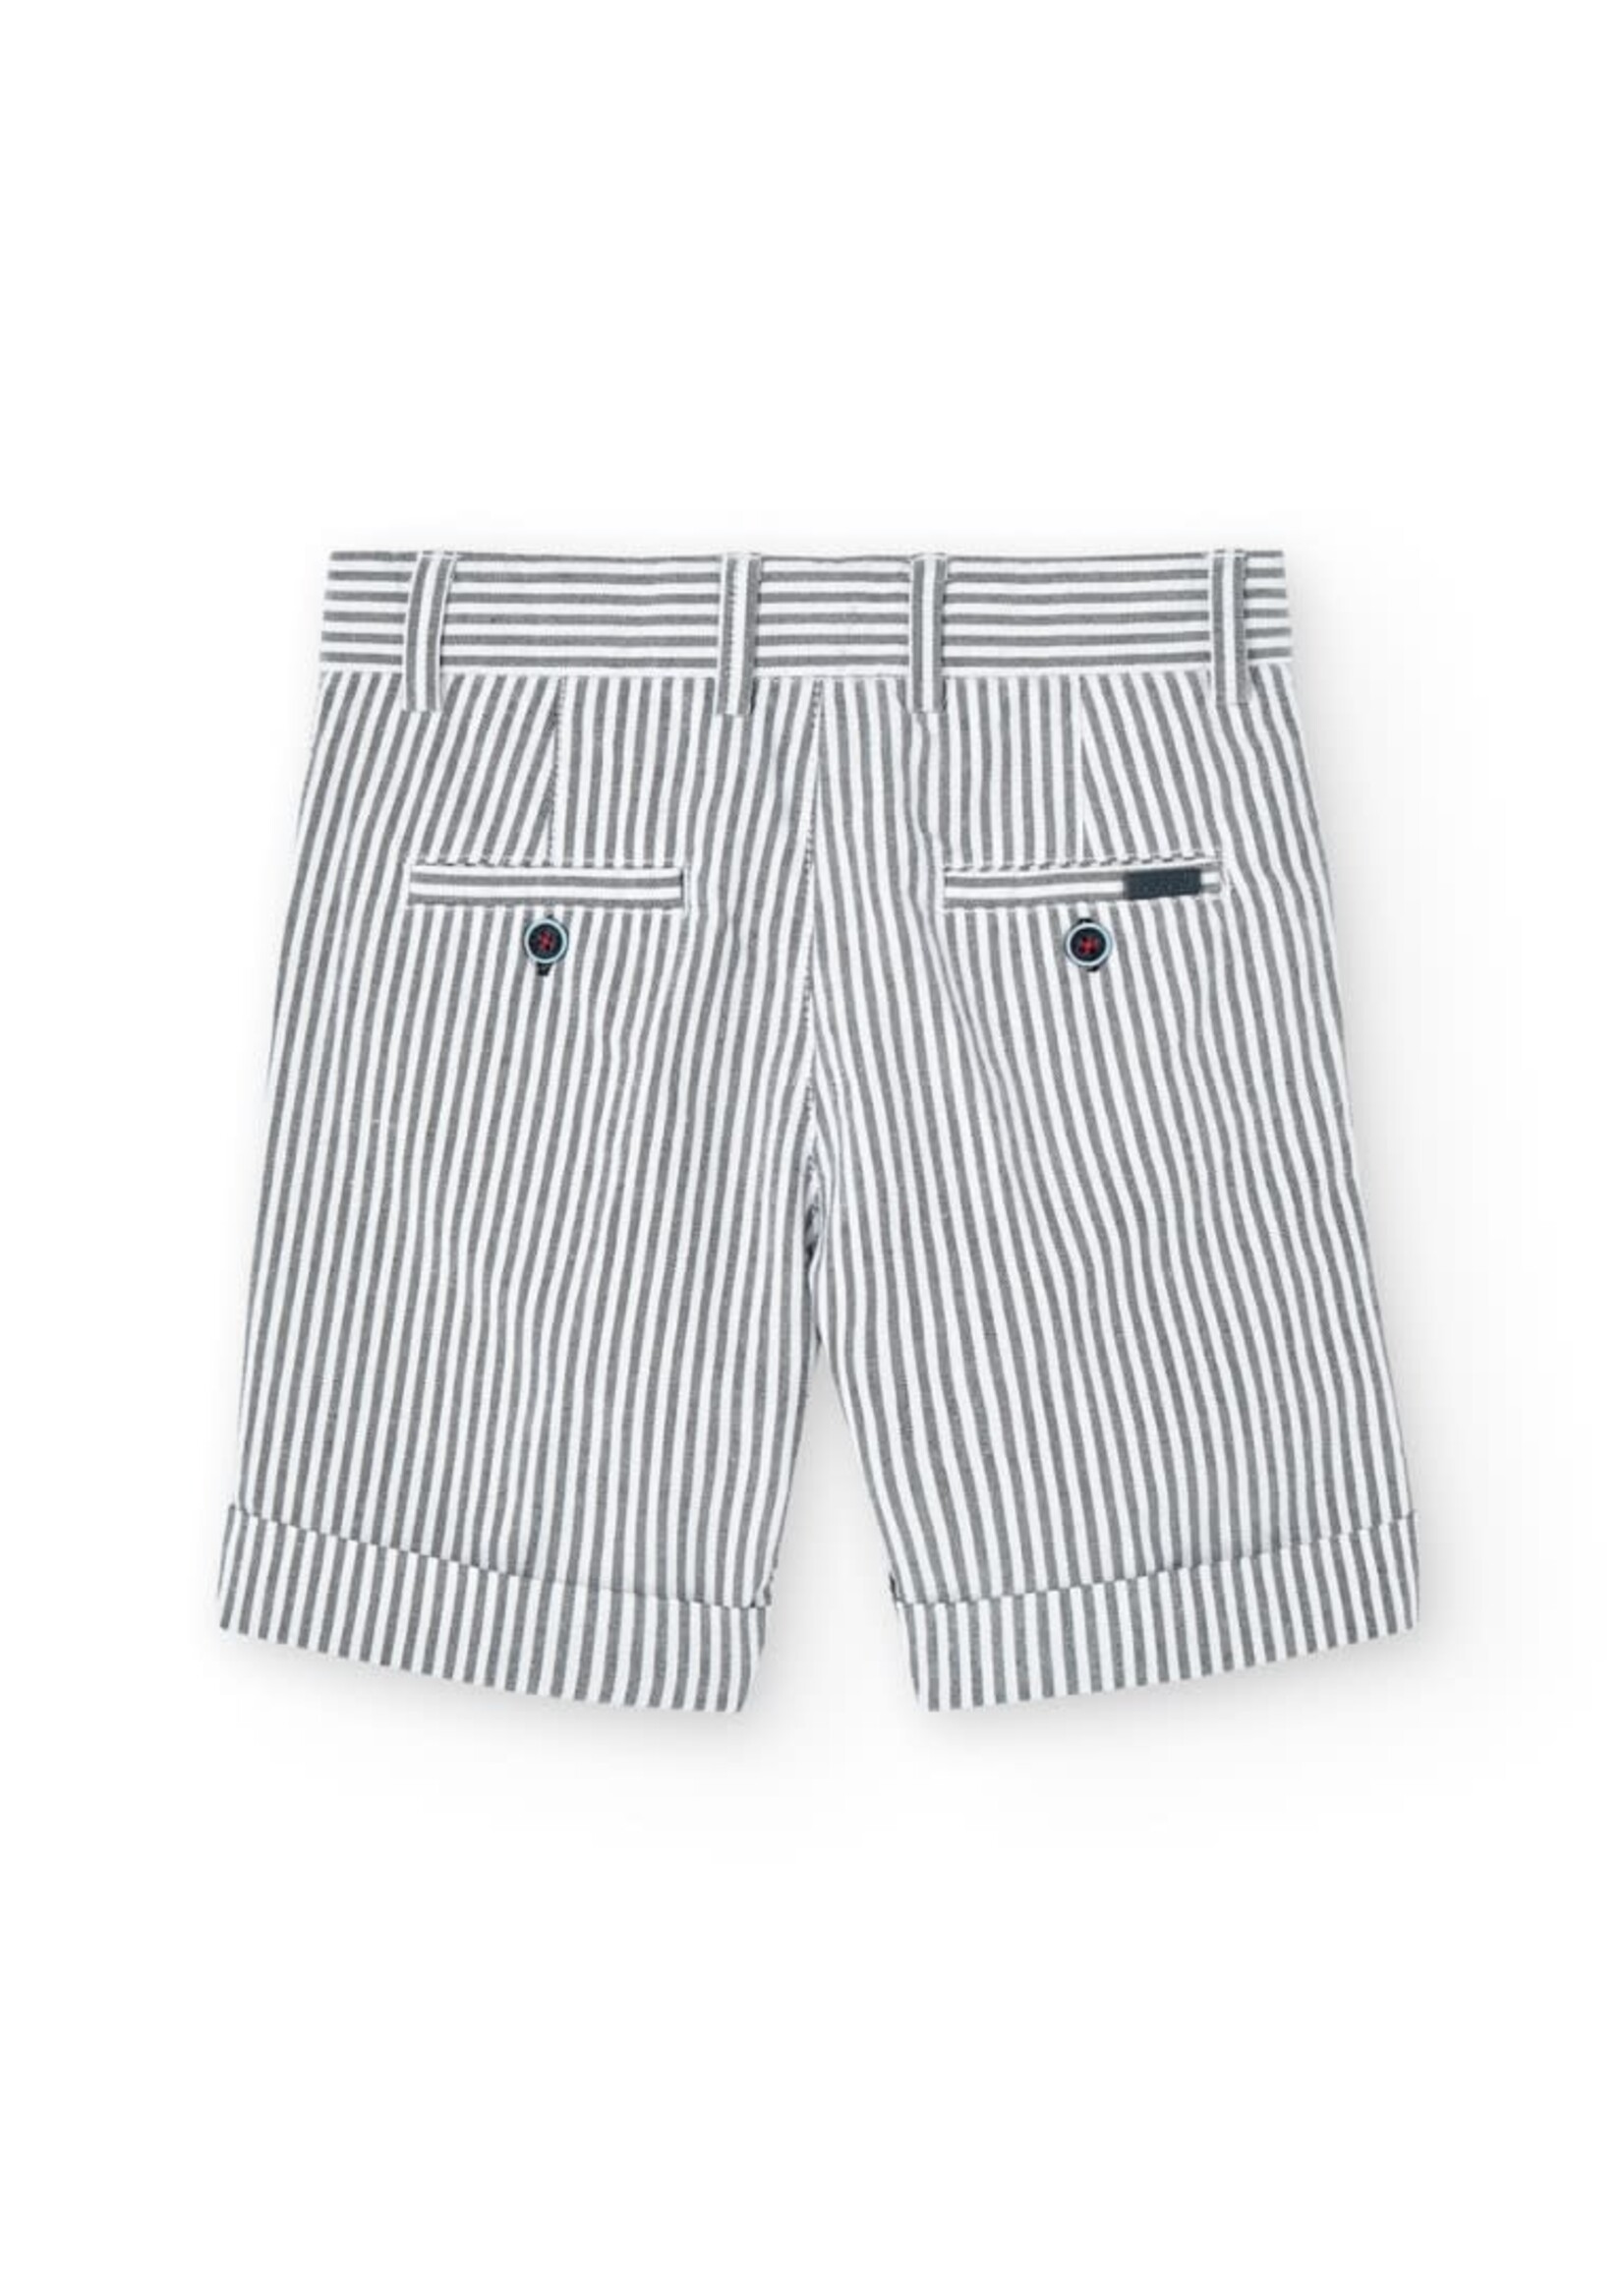 Boboli Oxford bermuda shorts striped for boy stripes 736310